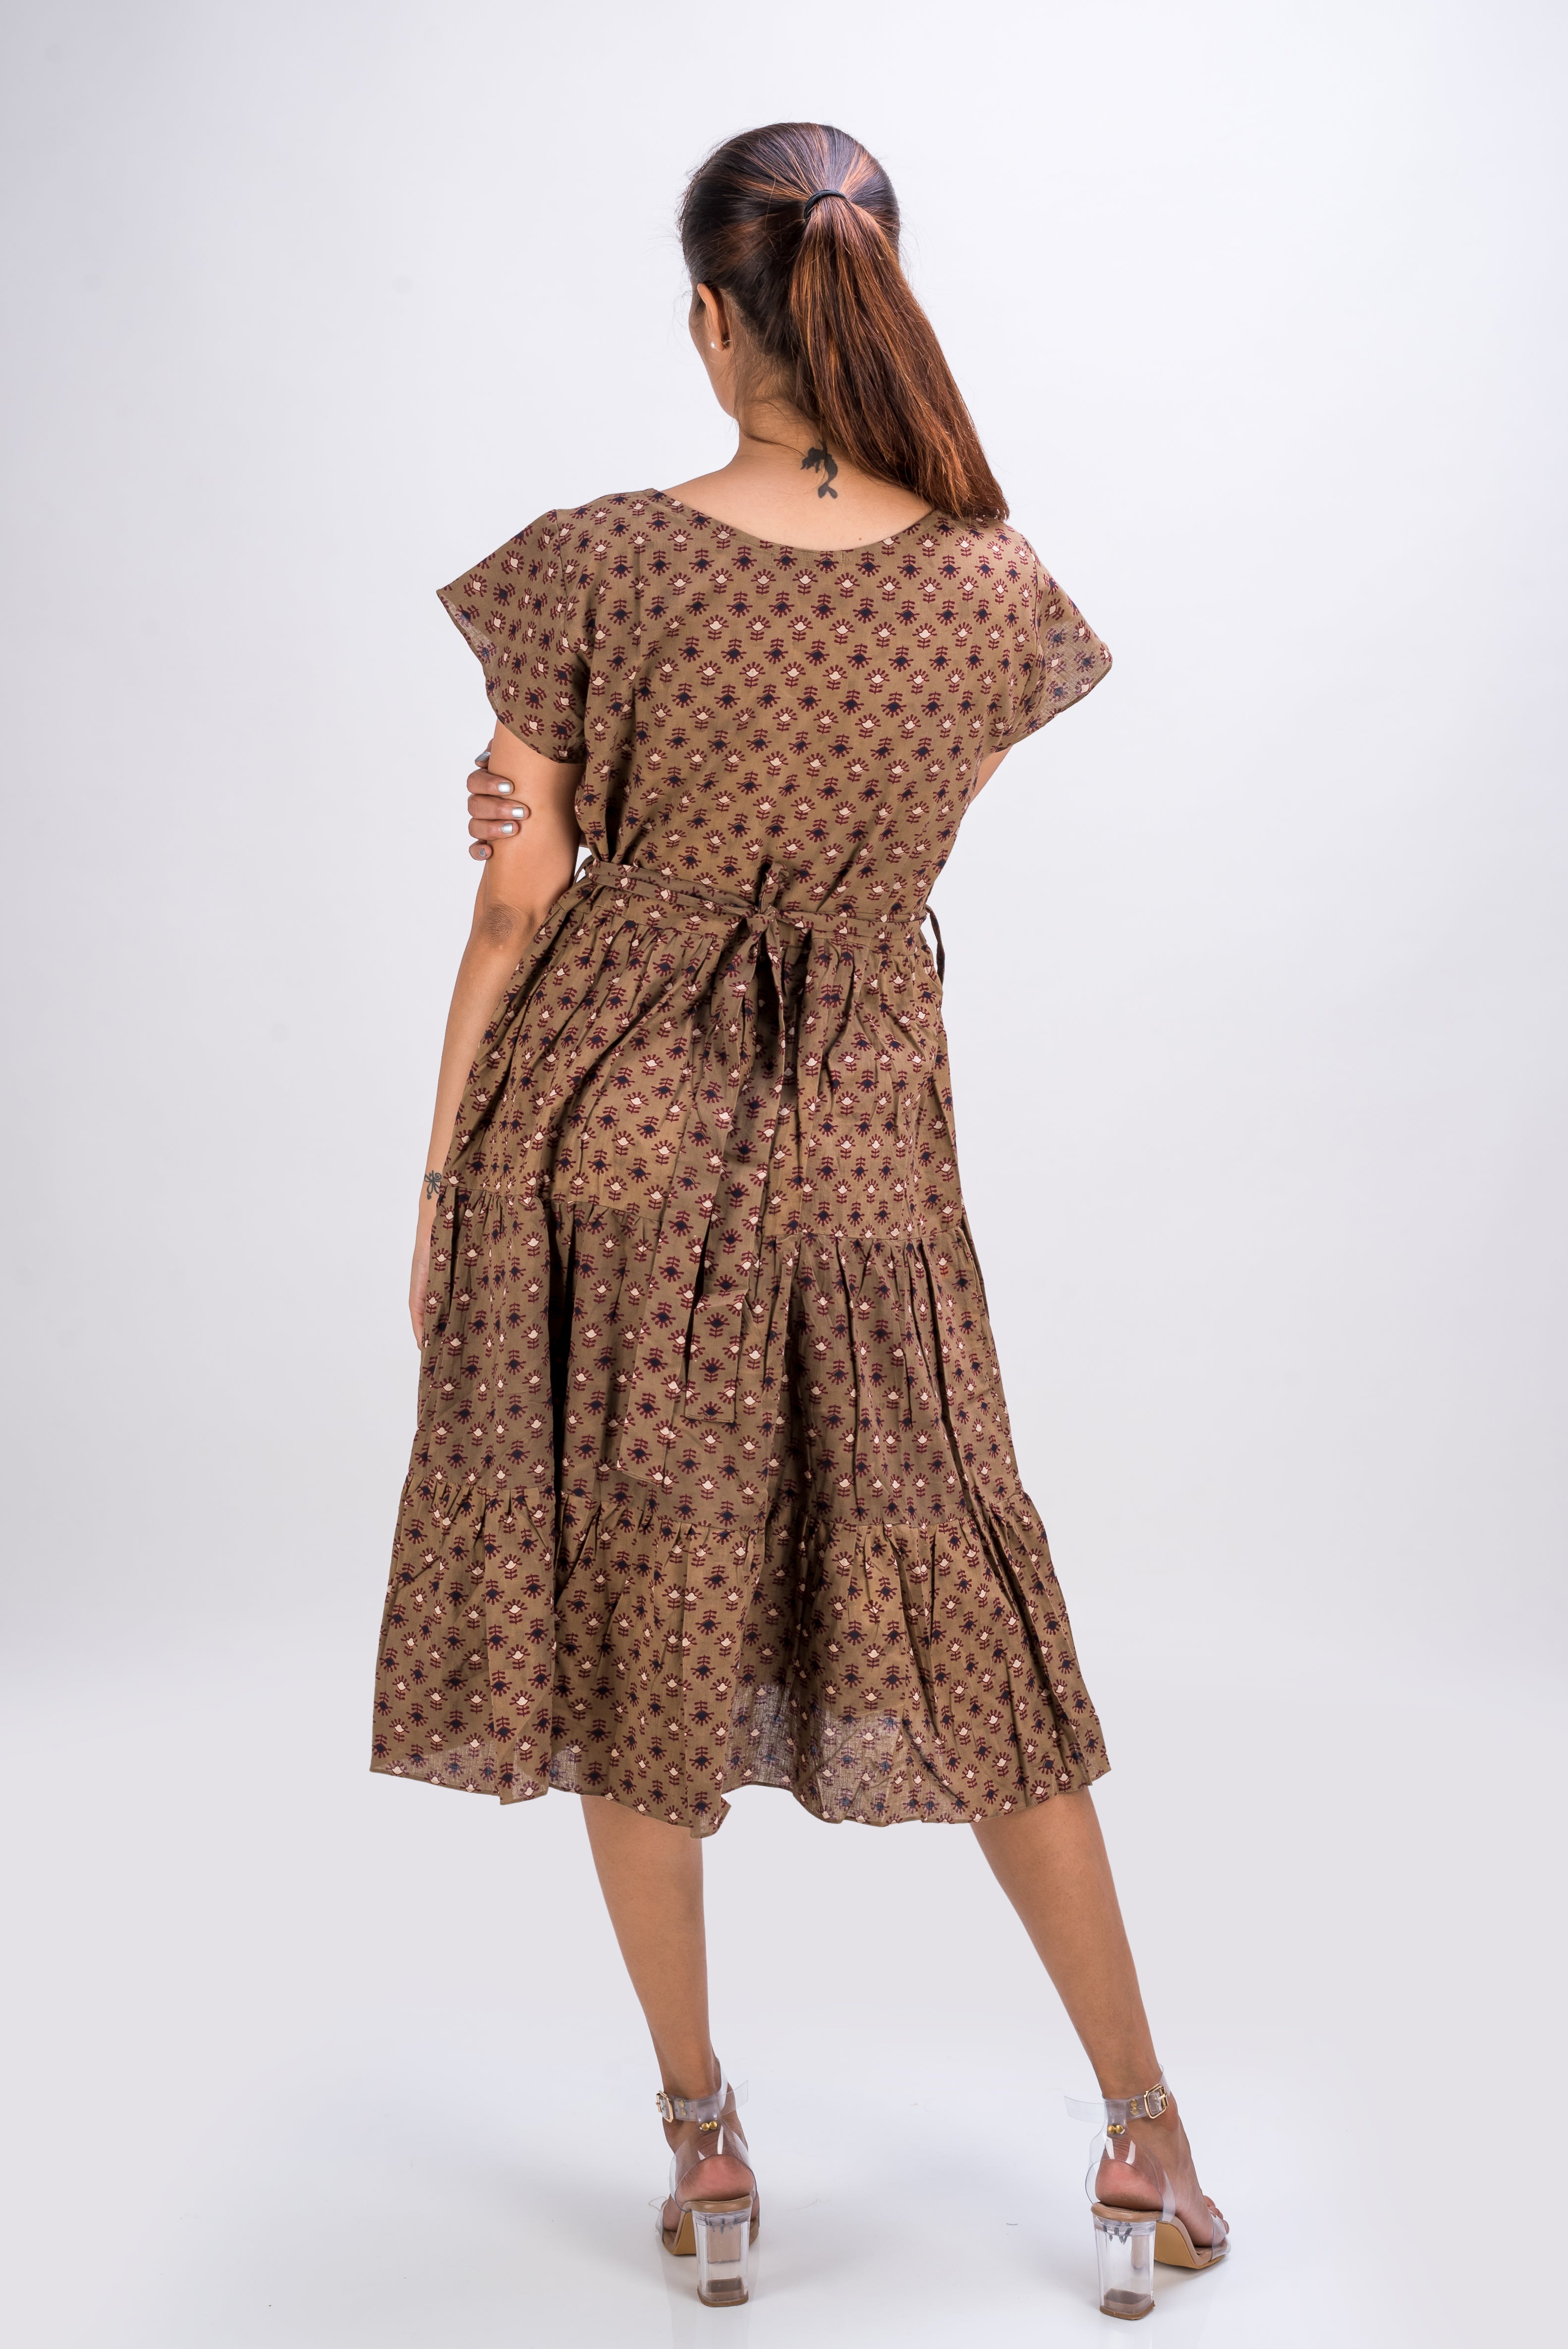 527-102  WhiteLotus "River" Women's Dress